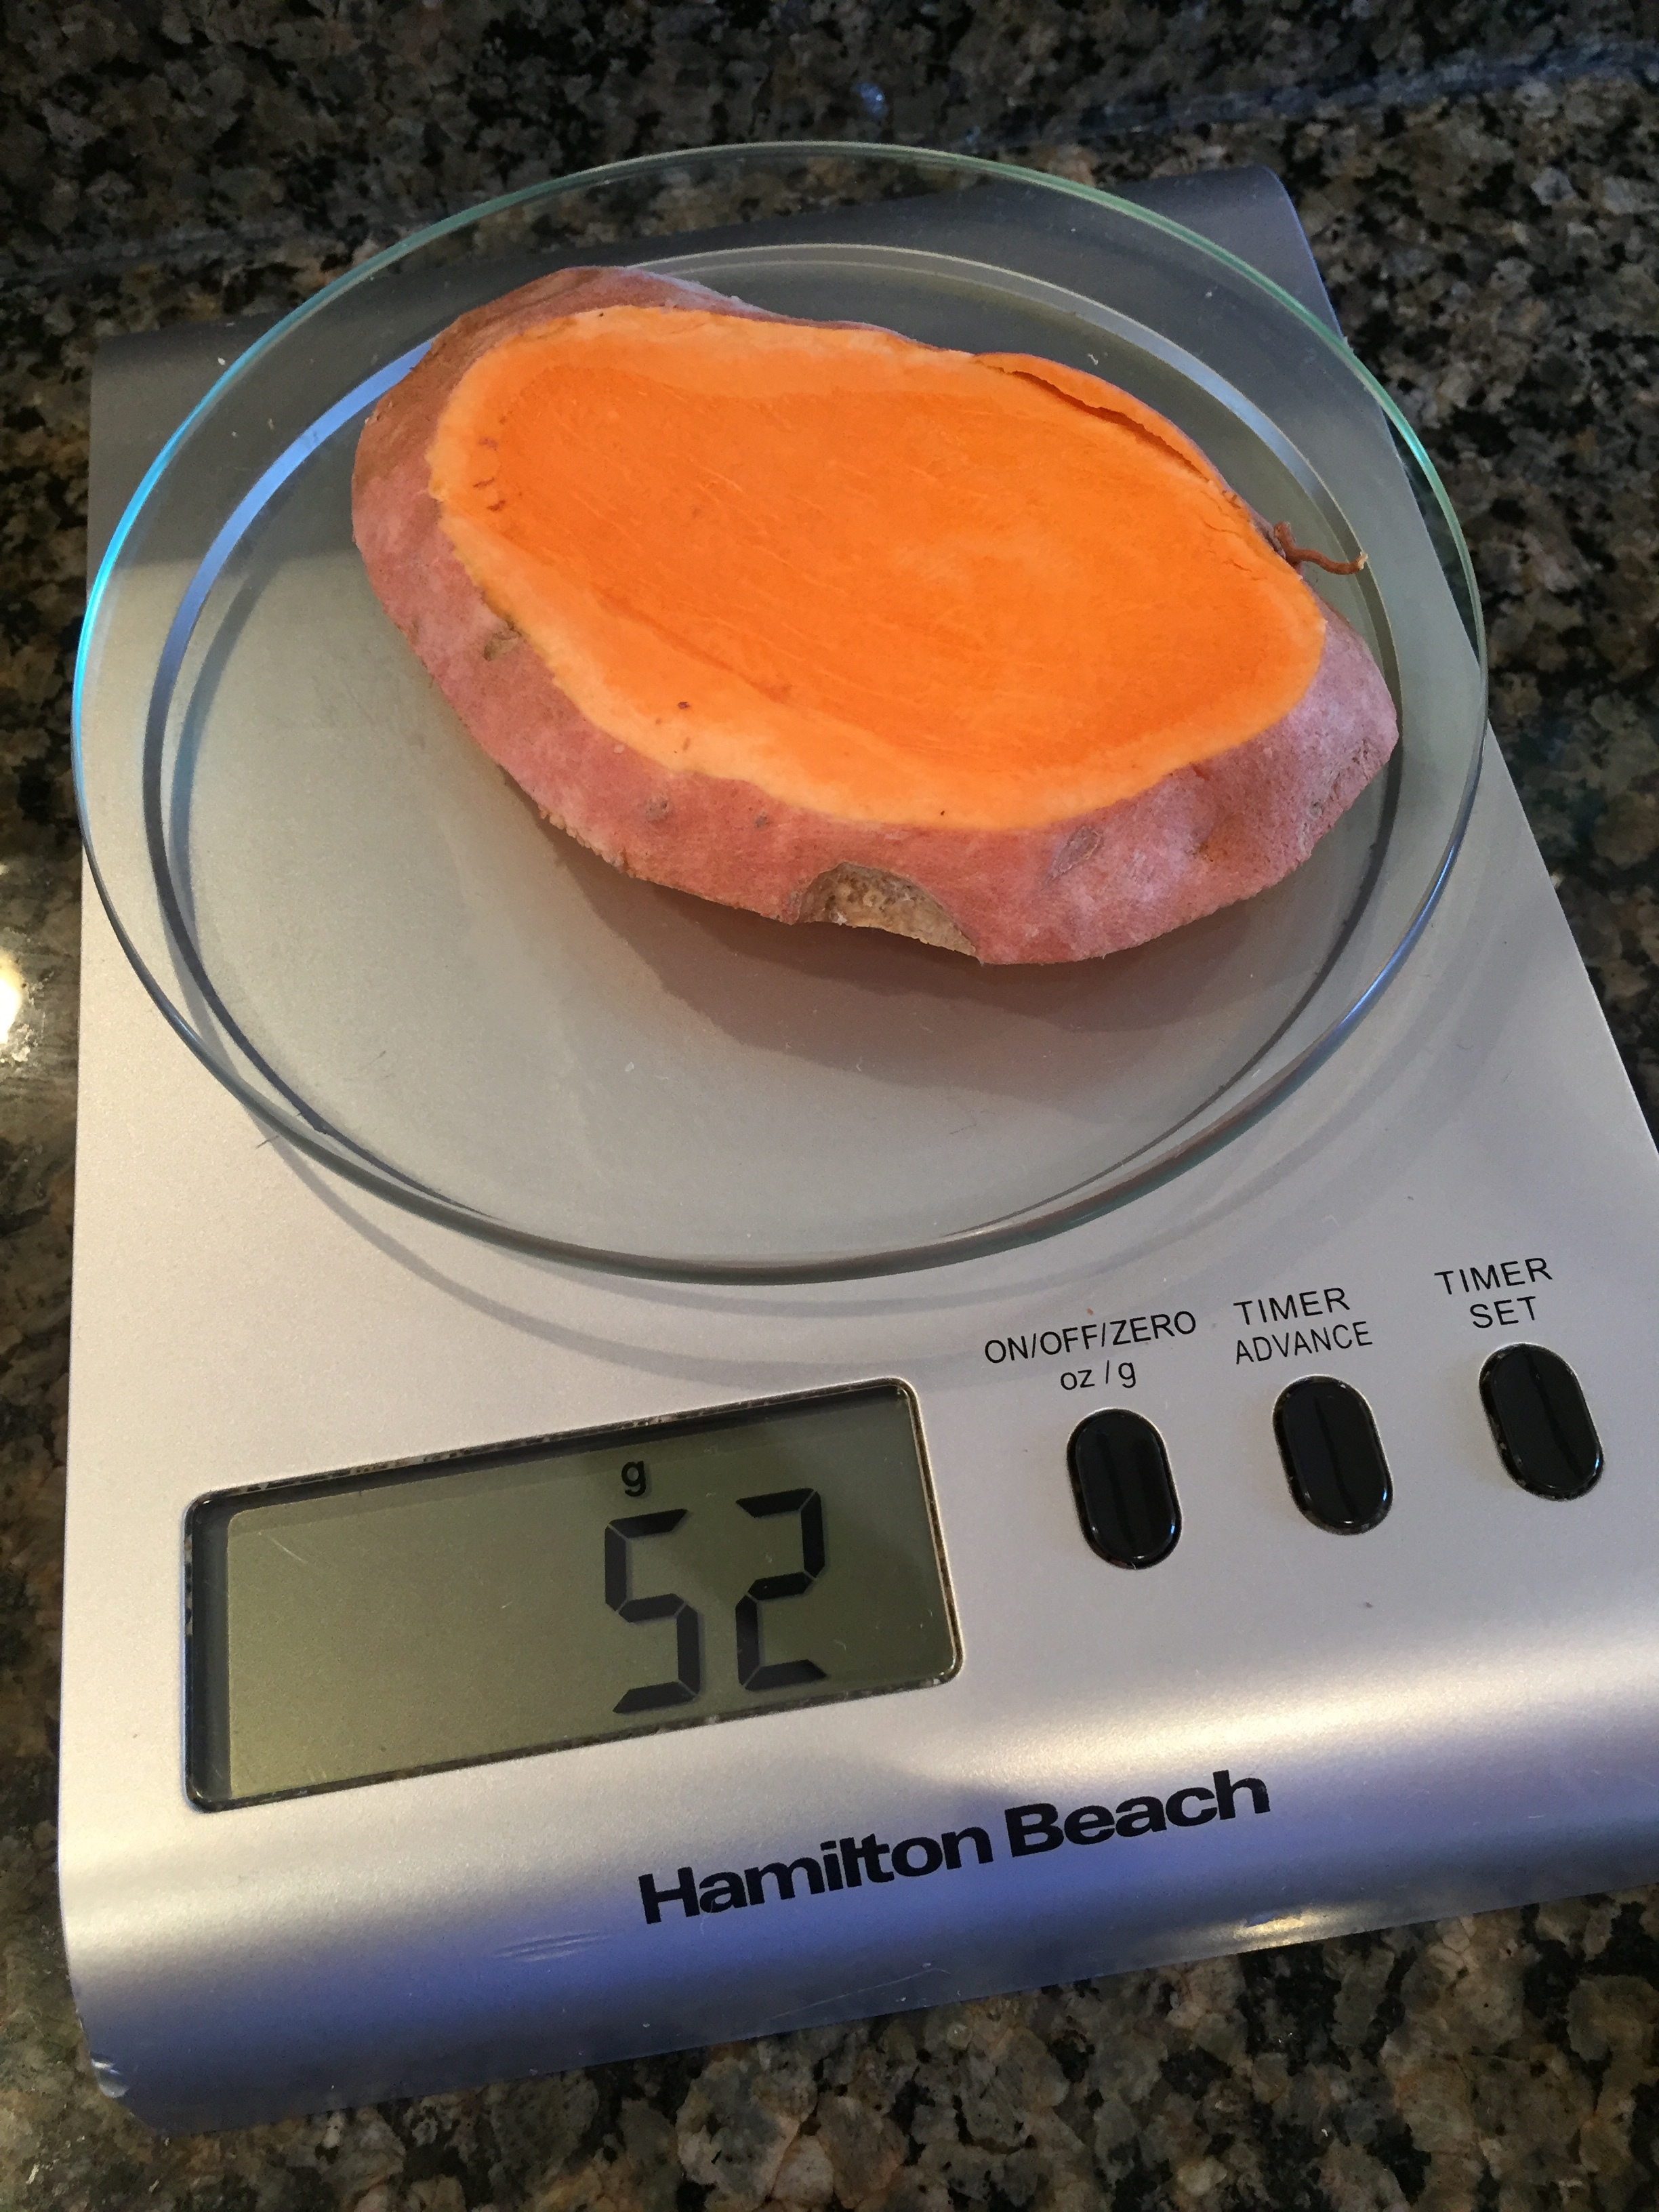 1/2 inch slice - 1.8 ounces or 52 grams